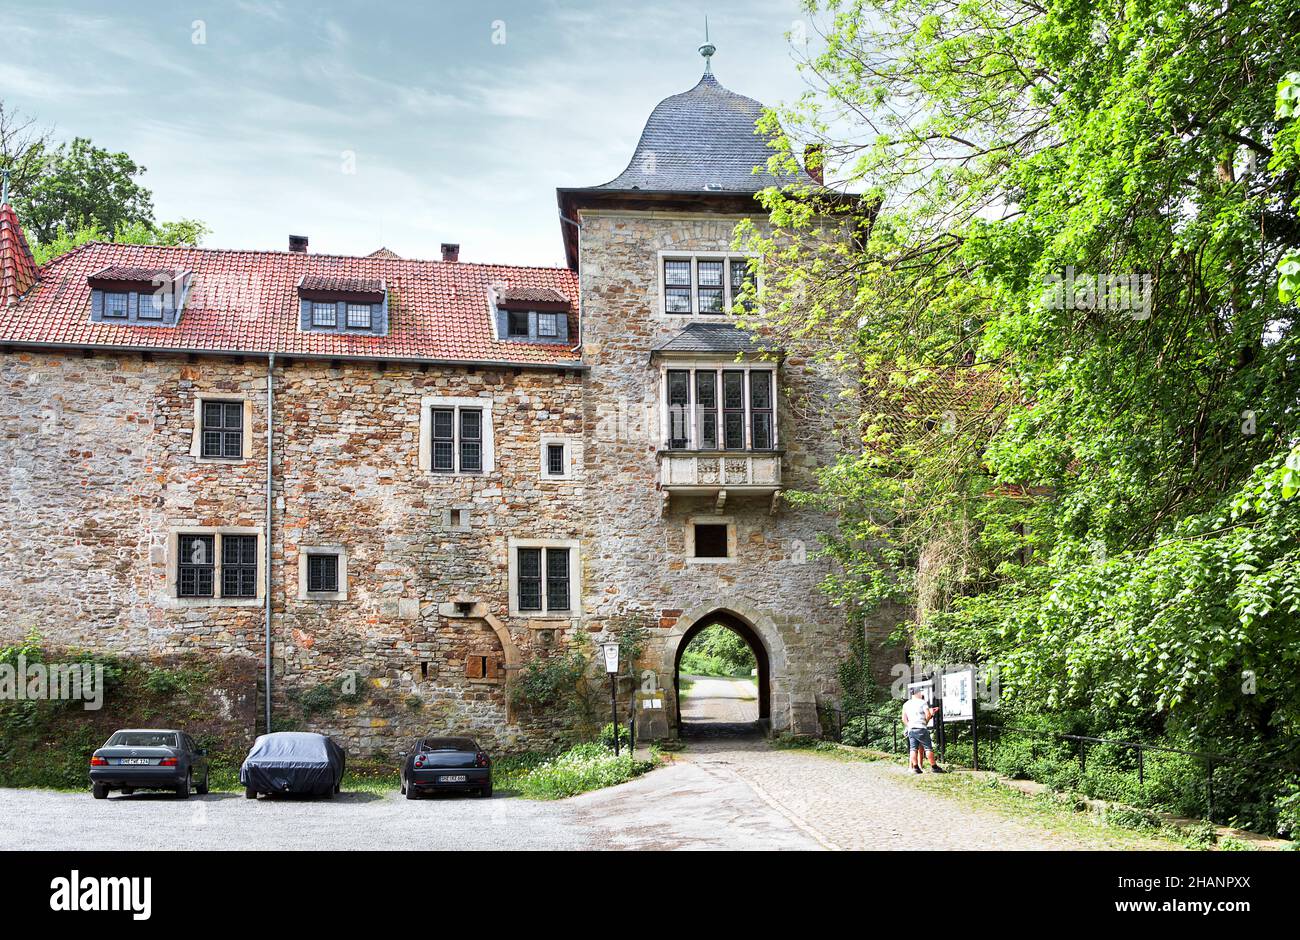 Lower castle gate, Schaumburg Castle, Rinteln, district of Schaumburg, Lower Saxony, Germany, Europe Stock Photo